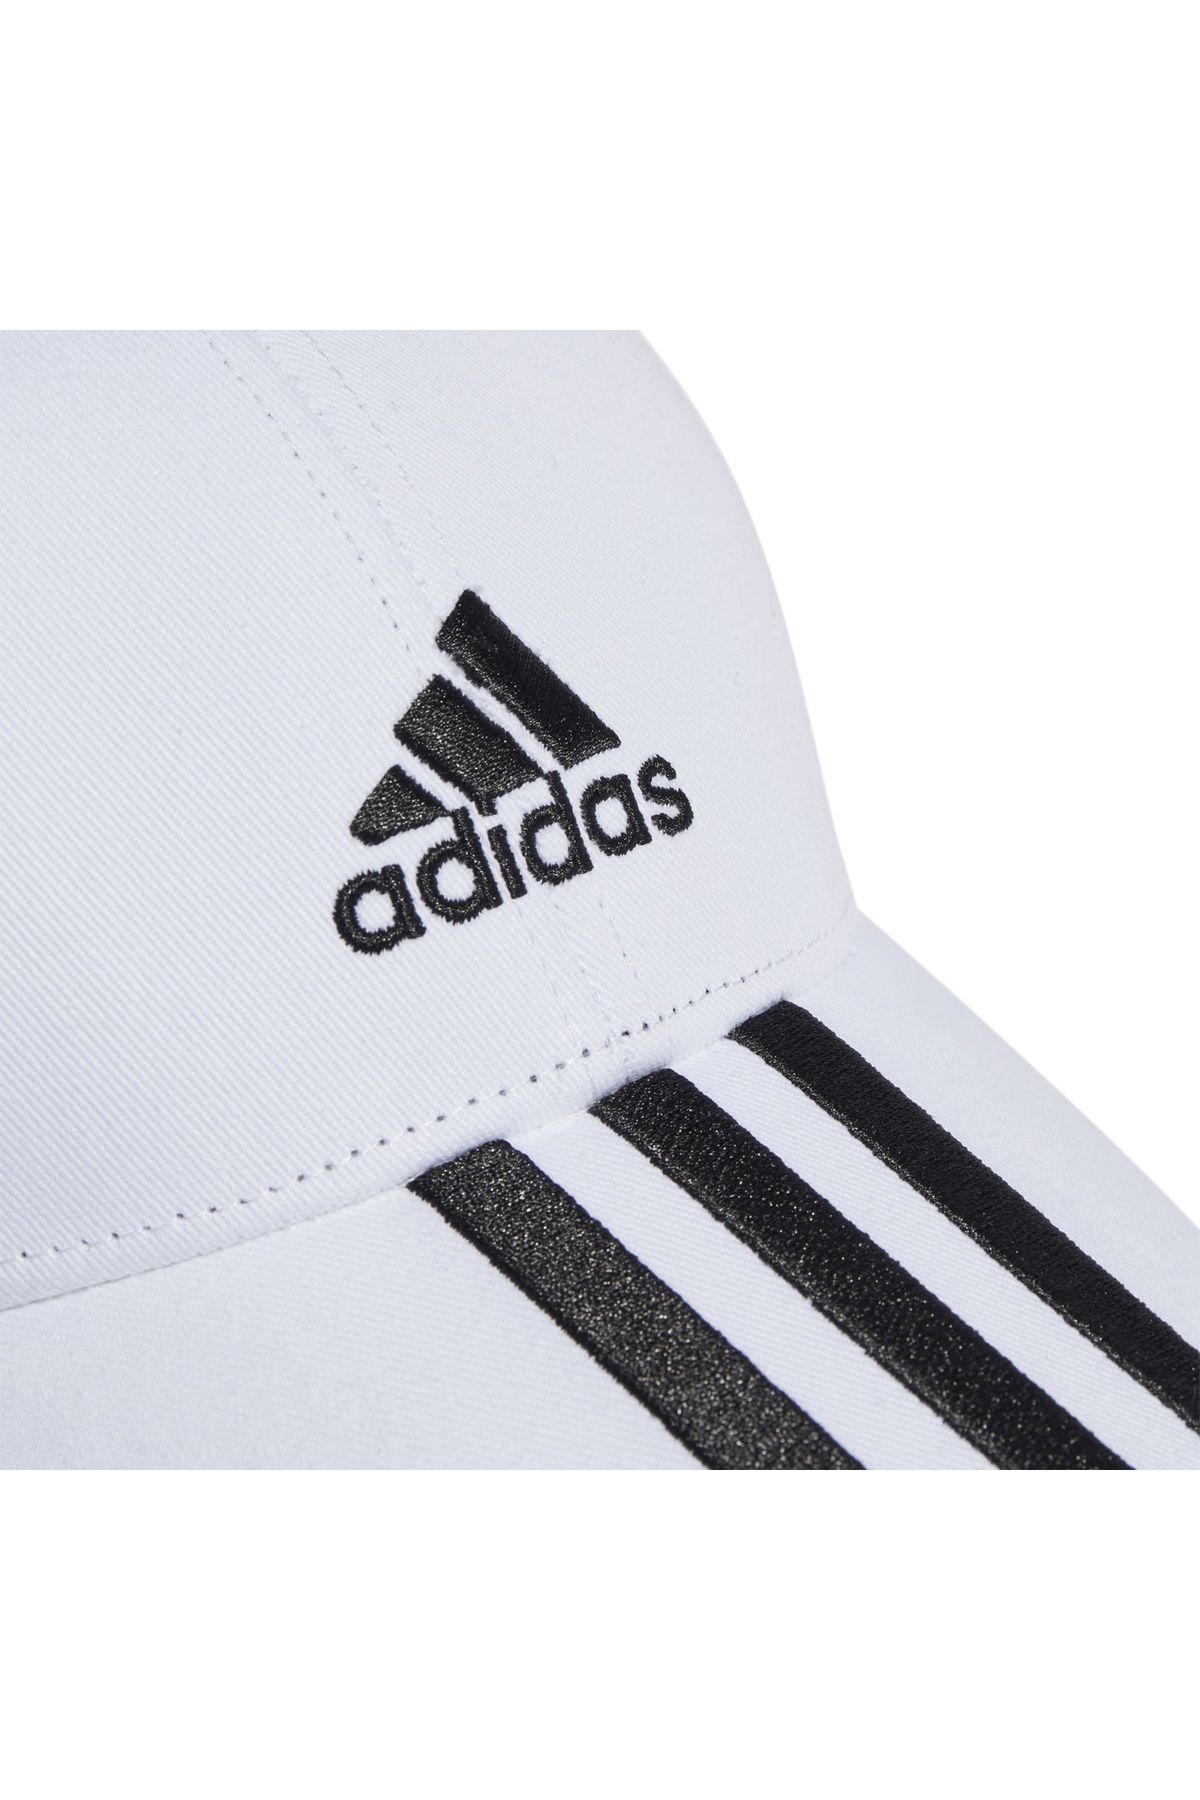 adidas ii3509-u adidas bball 3s کلاه ct سفید